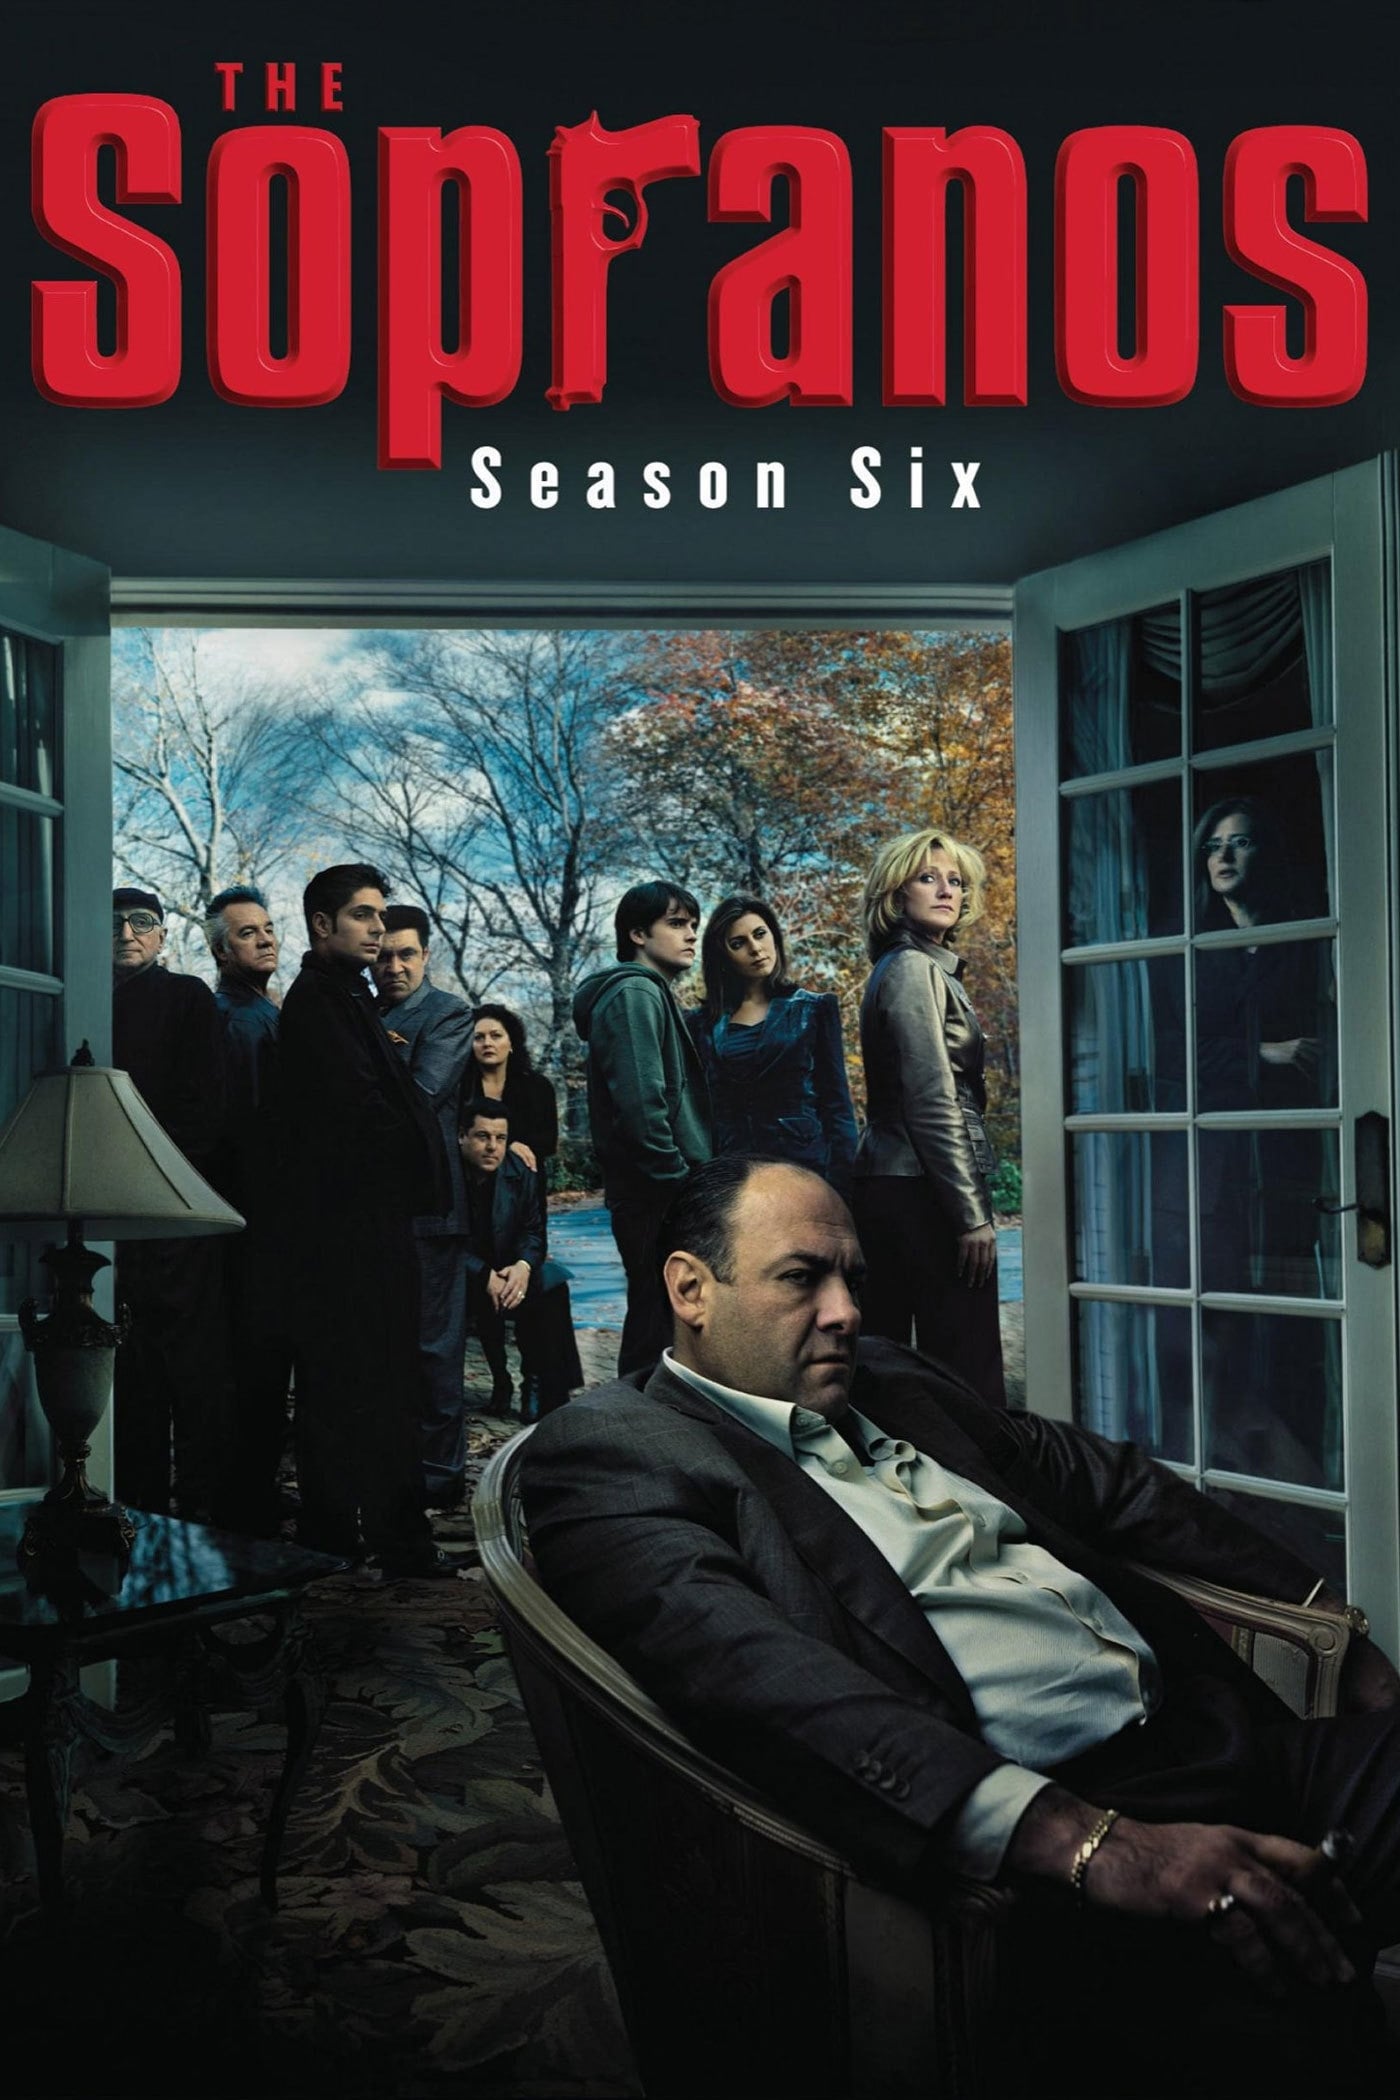 The Sopranos เดอะ โซปราโน่ส์ Season 6